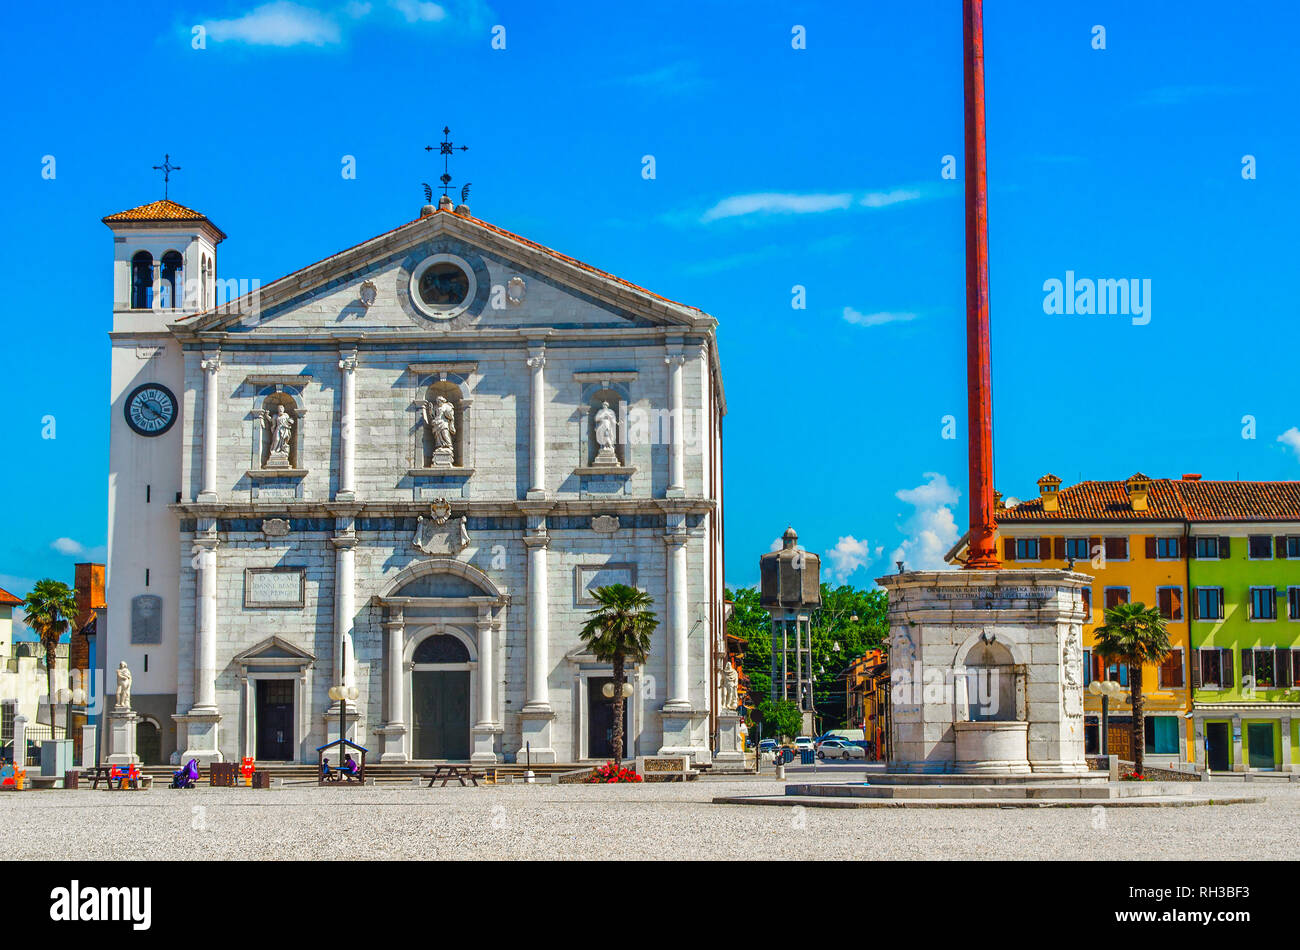 Cattedrale di Palmanova - Provincia di Udine - Regione Friuli Venezia Giulia - Italia Foto Stock